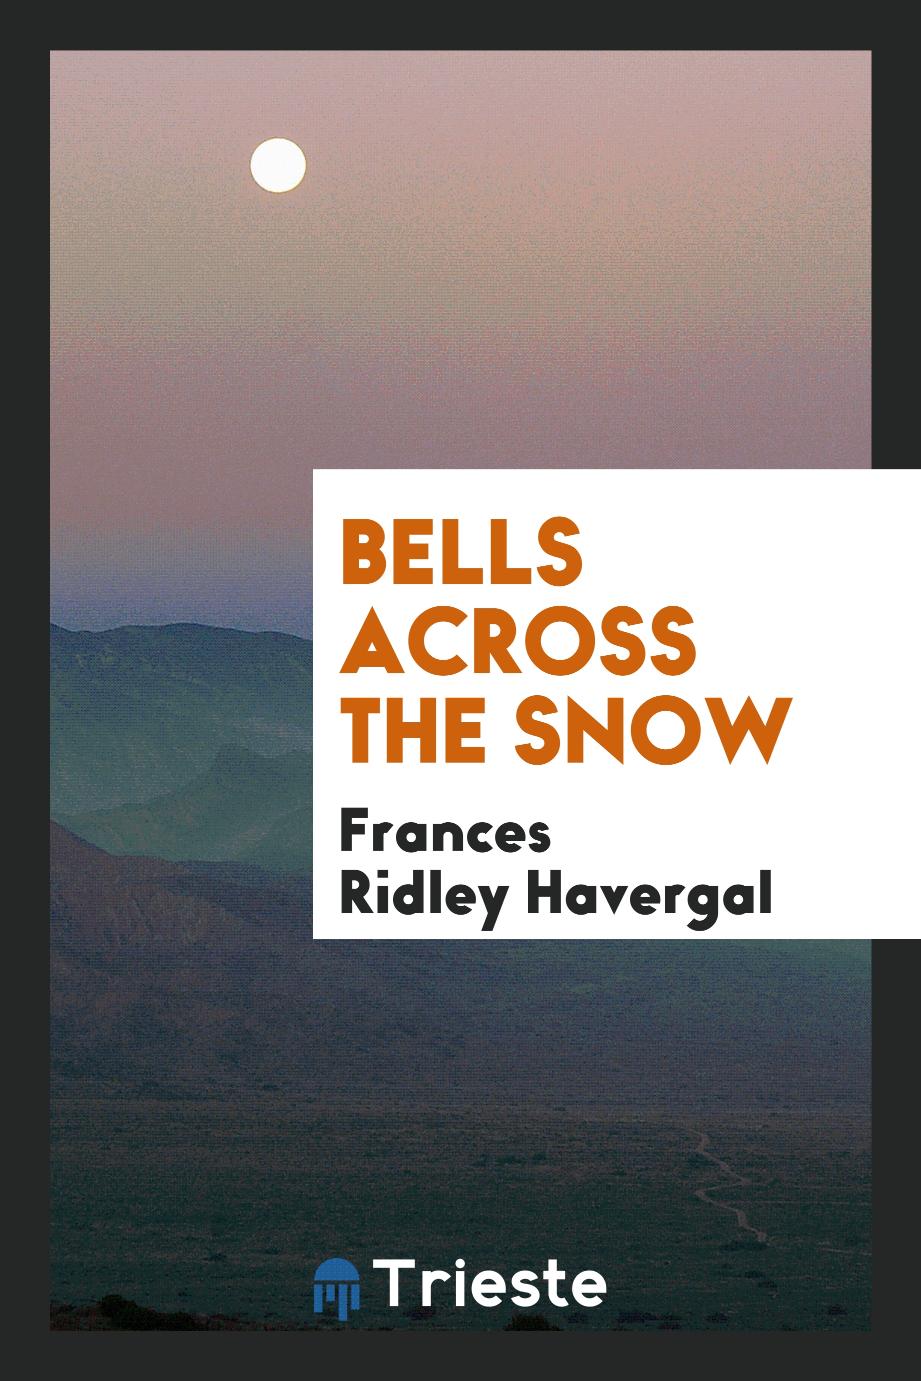 Bells across the snow